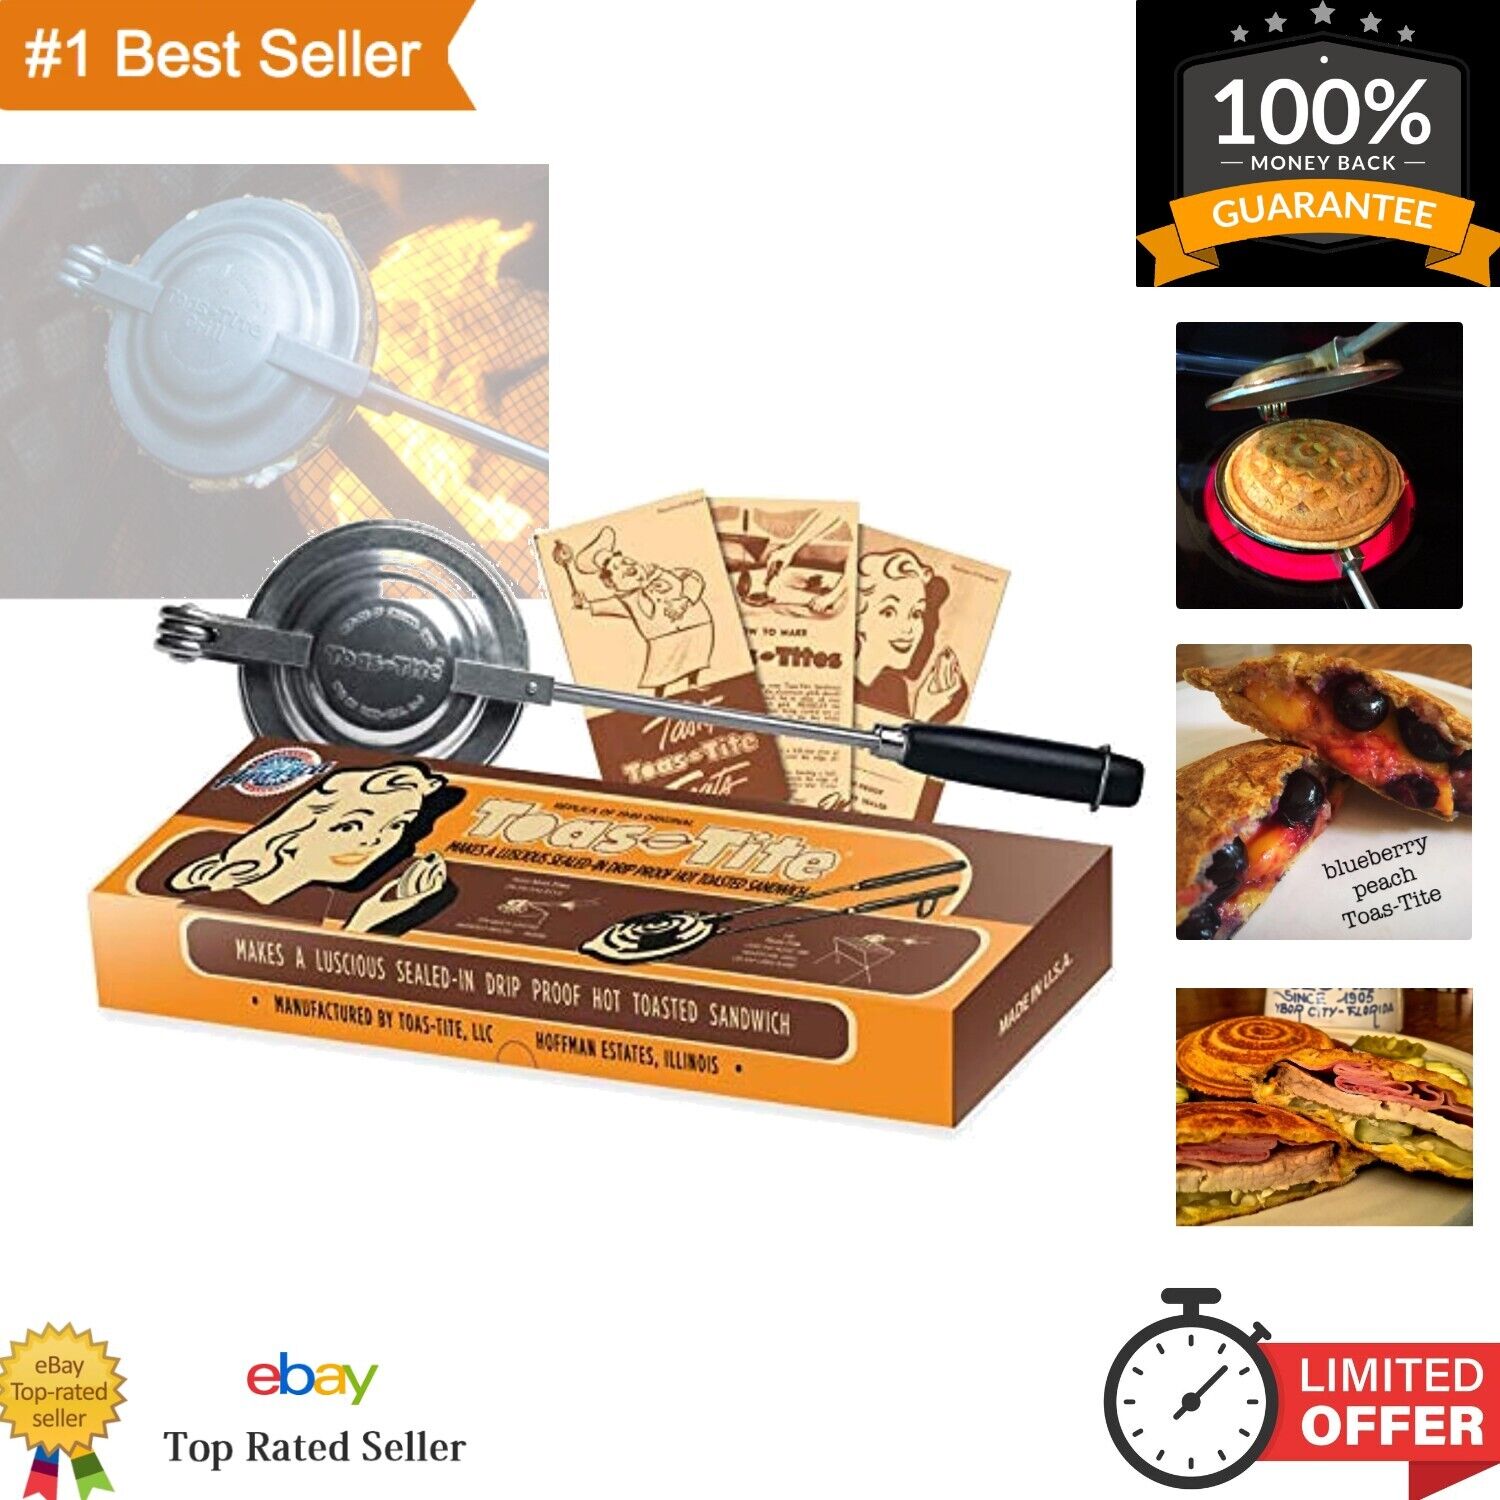 Toas-Tite Sandwich Grill - Handheld Pie Iron, Sandwich Maker, Hand Toaster,...